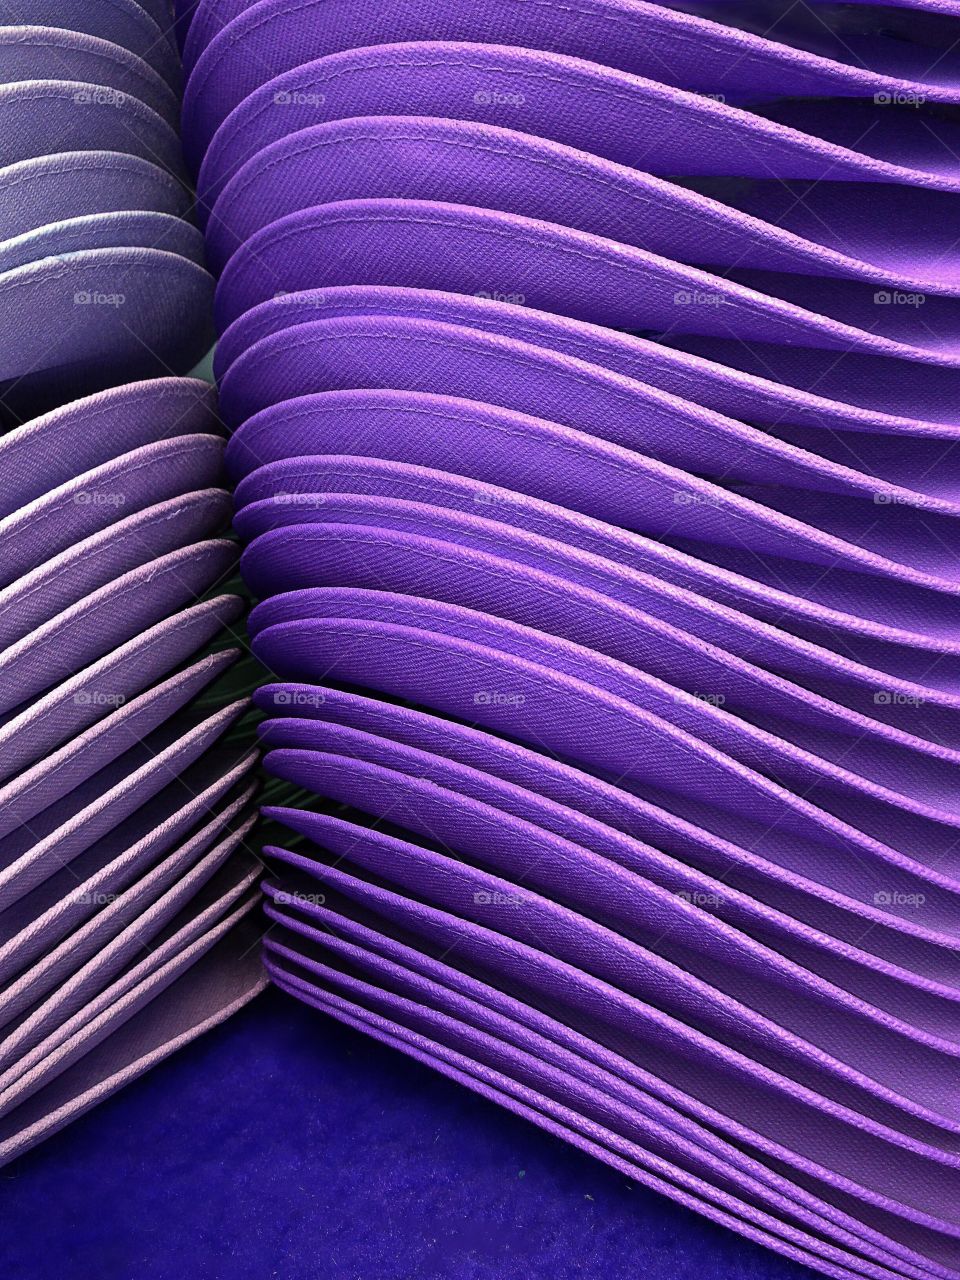 Purple hats